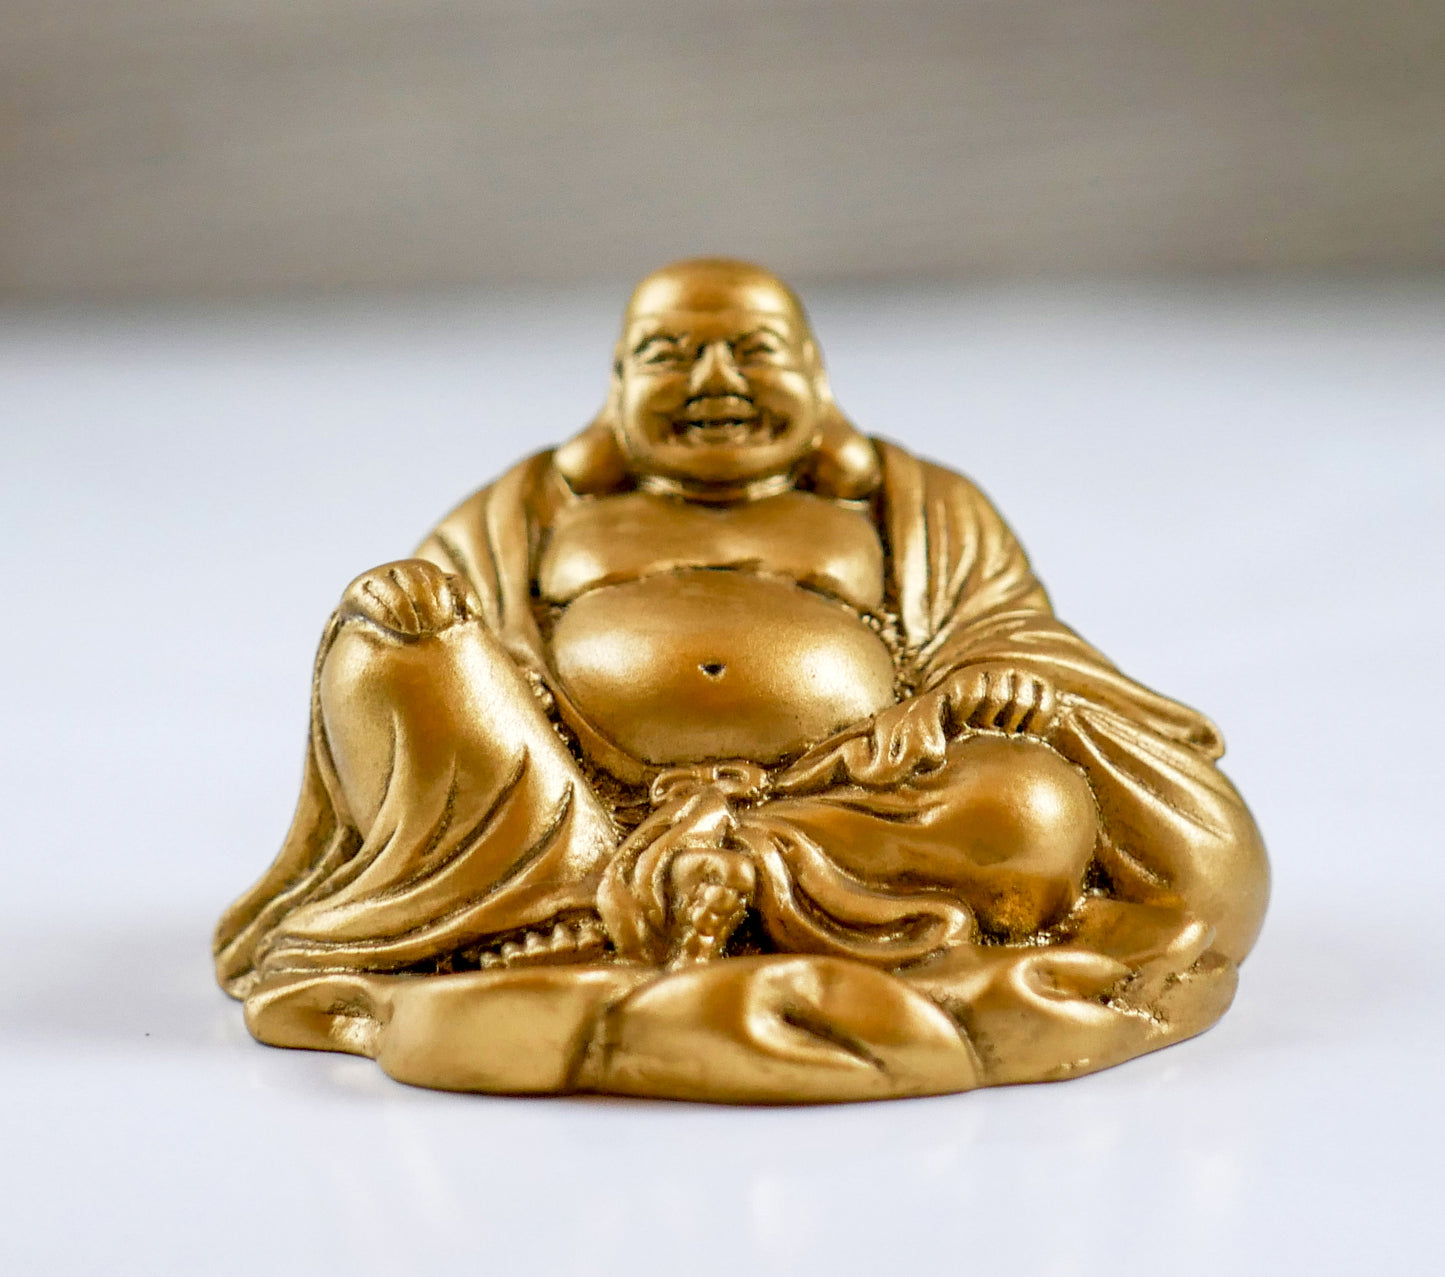 Gold Buddha Statue Figurine